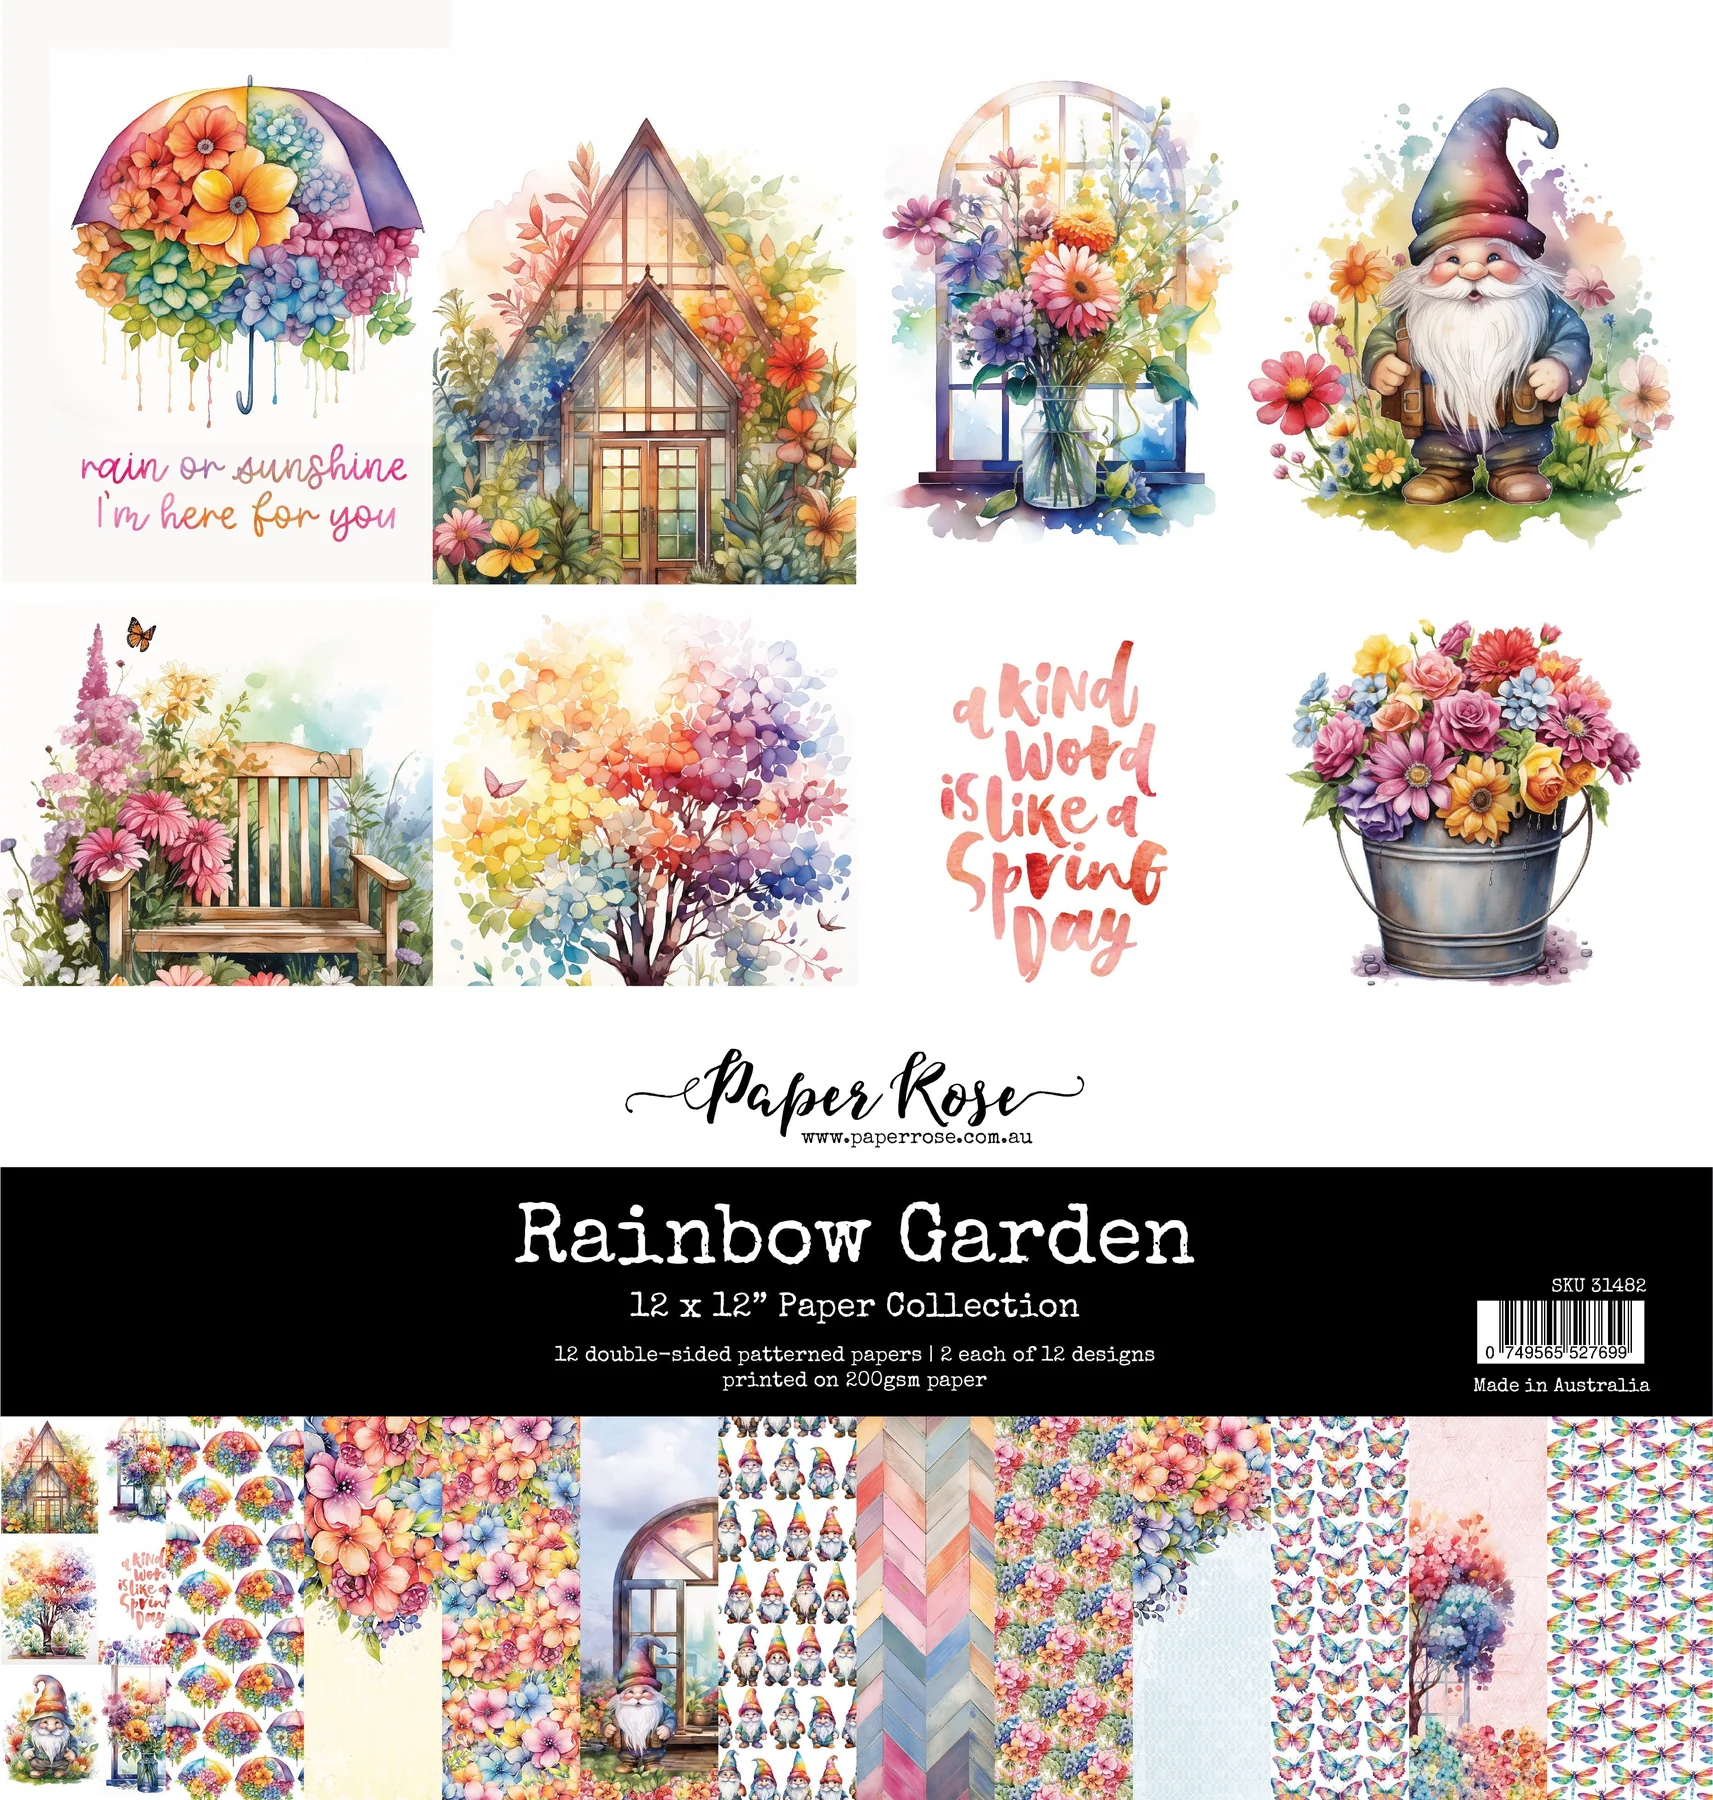 Rainbow Garden 12x12 Paper Collection 31482